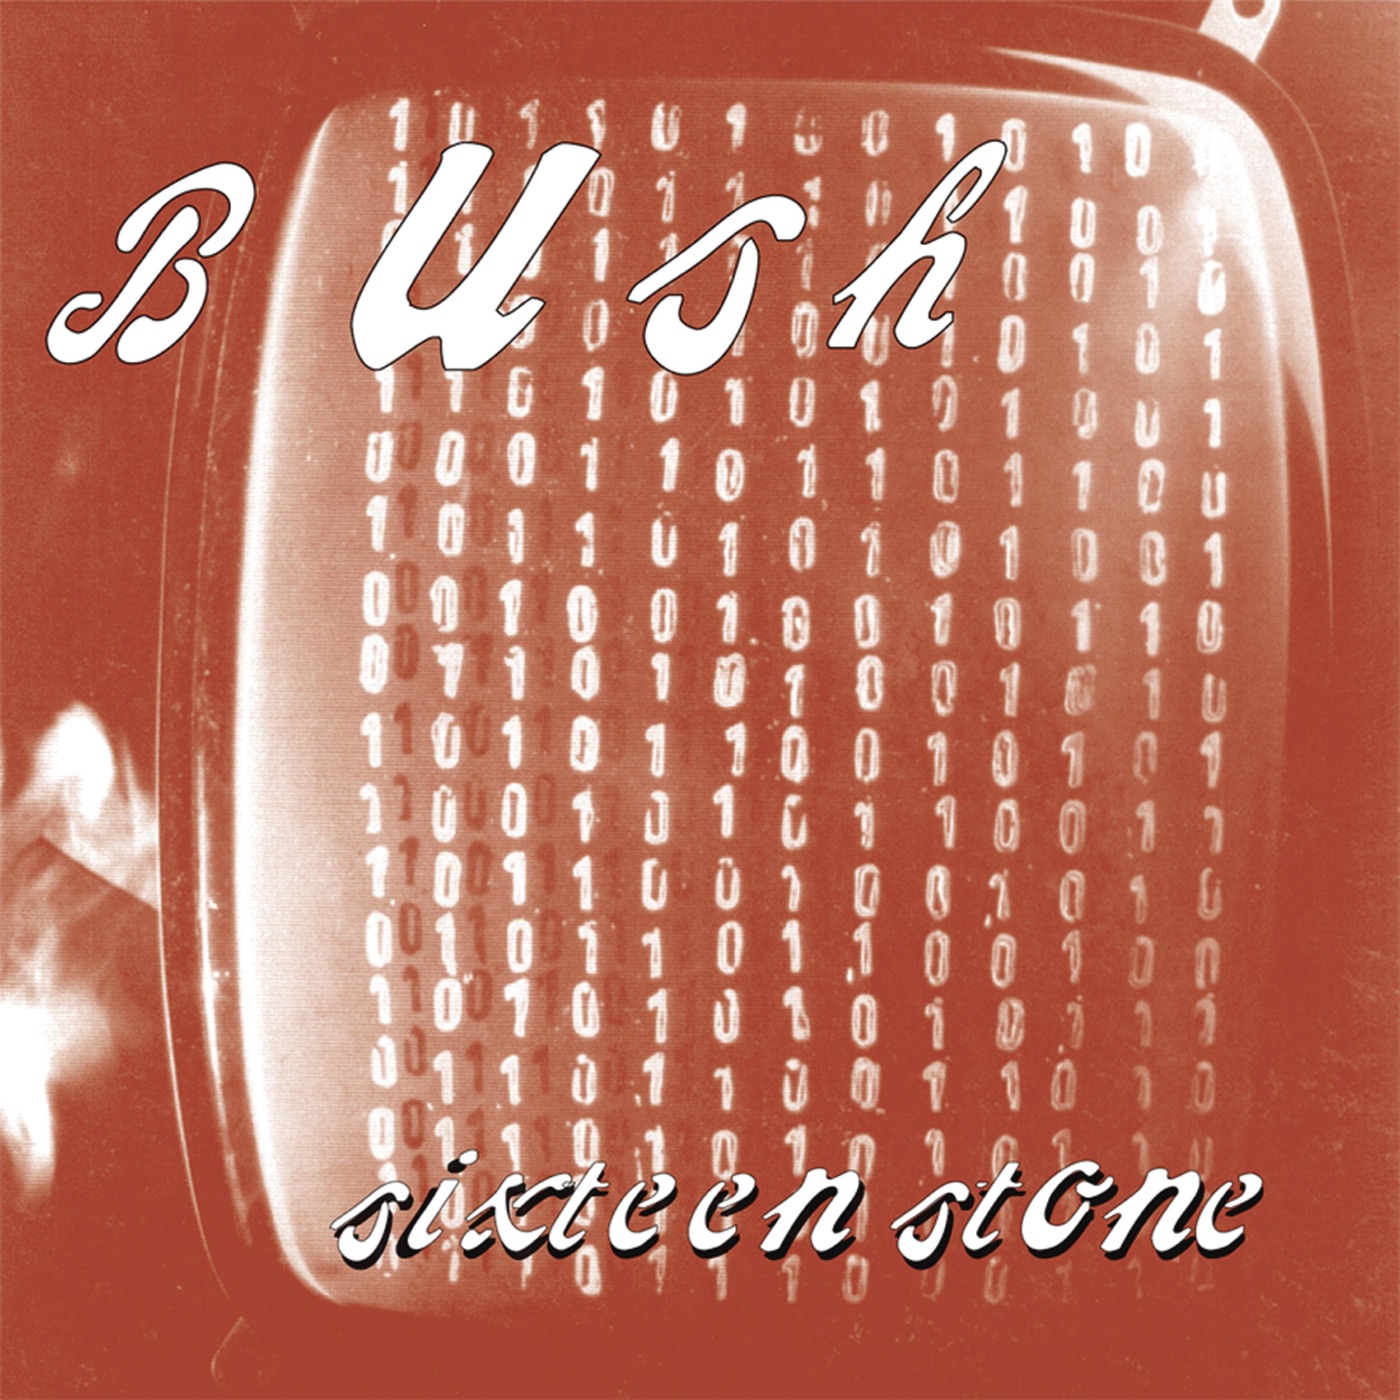 Sixteen Stone (Remastered) by Bush